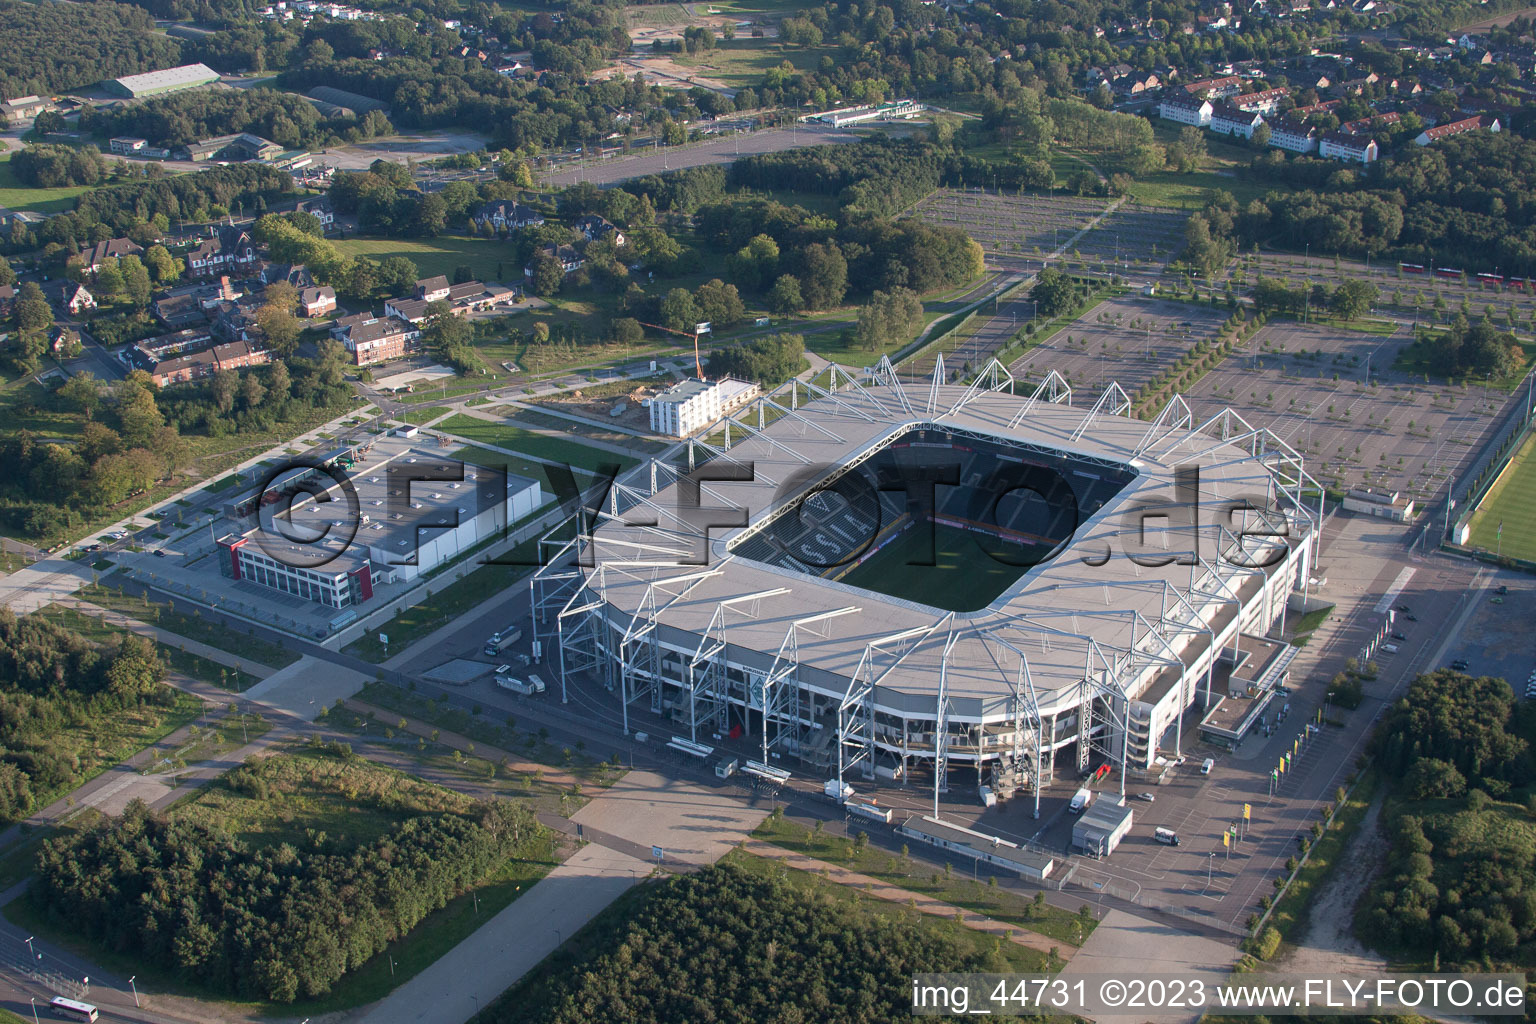 Borrussia Arena in Mönchengladbach in the state North Rhine-Westphalia, Germany